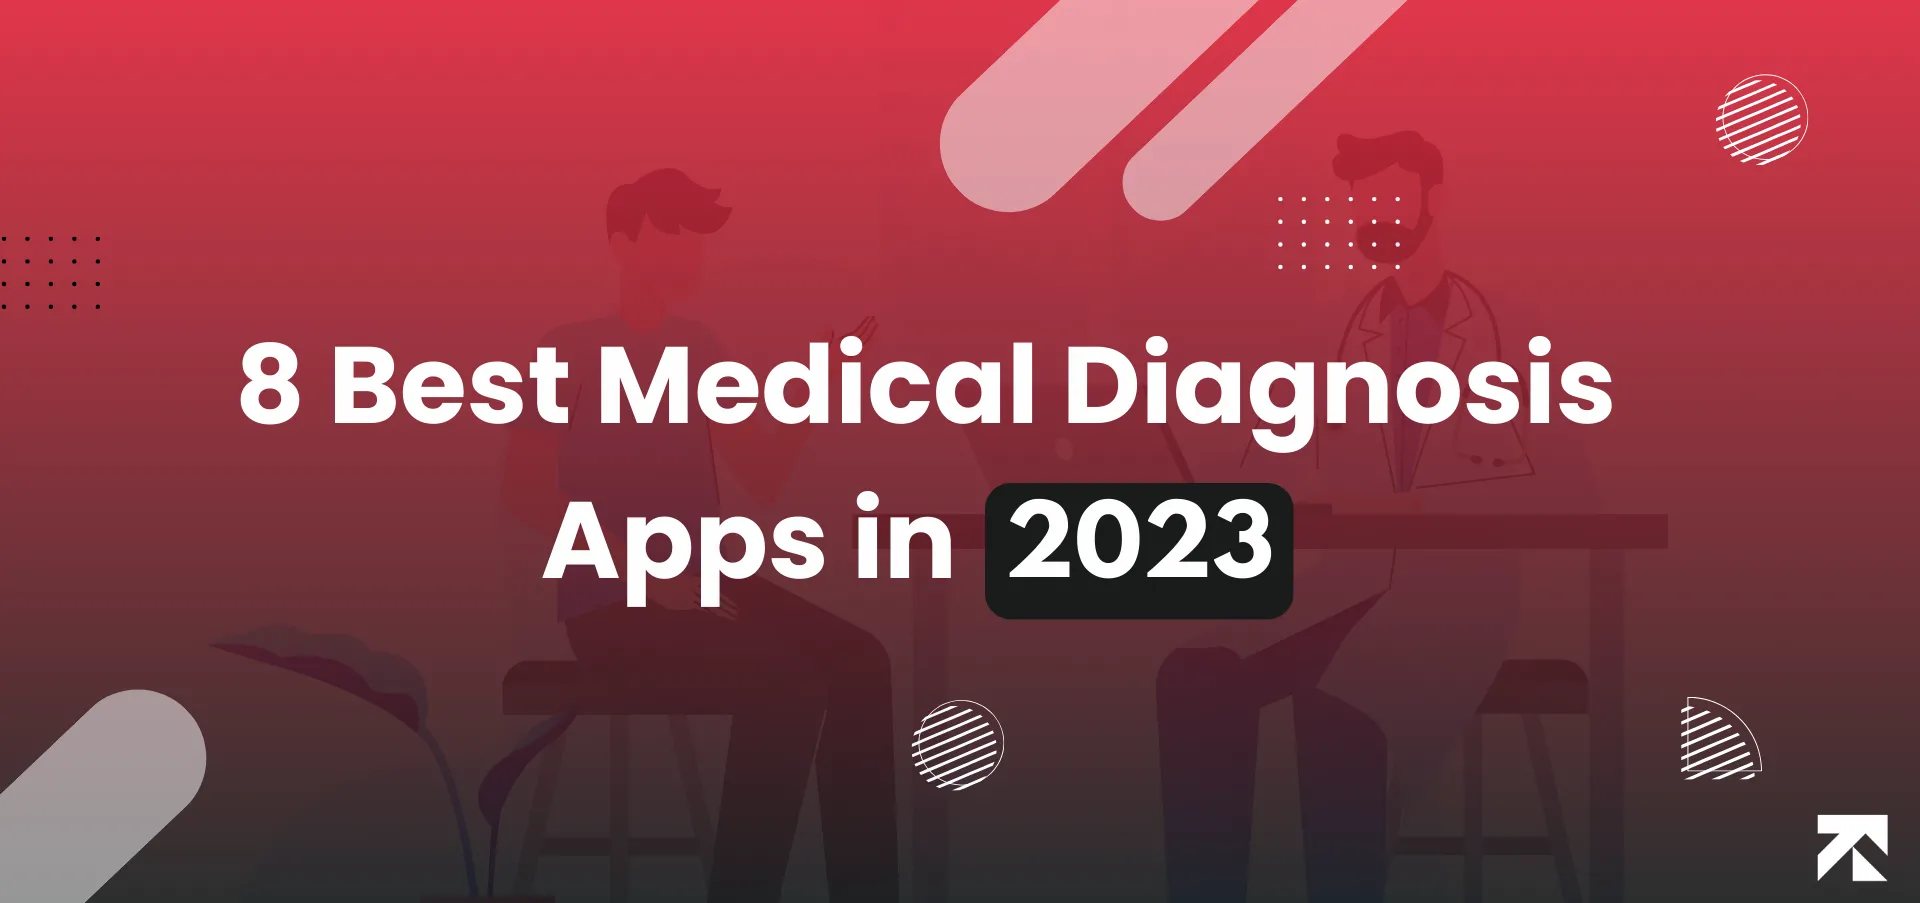 Best Medical Diagnosis Apps